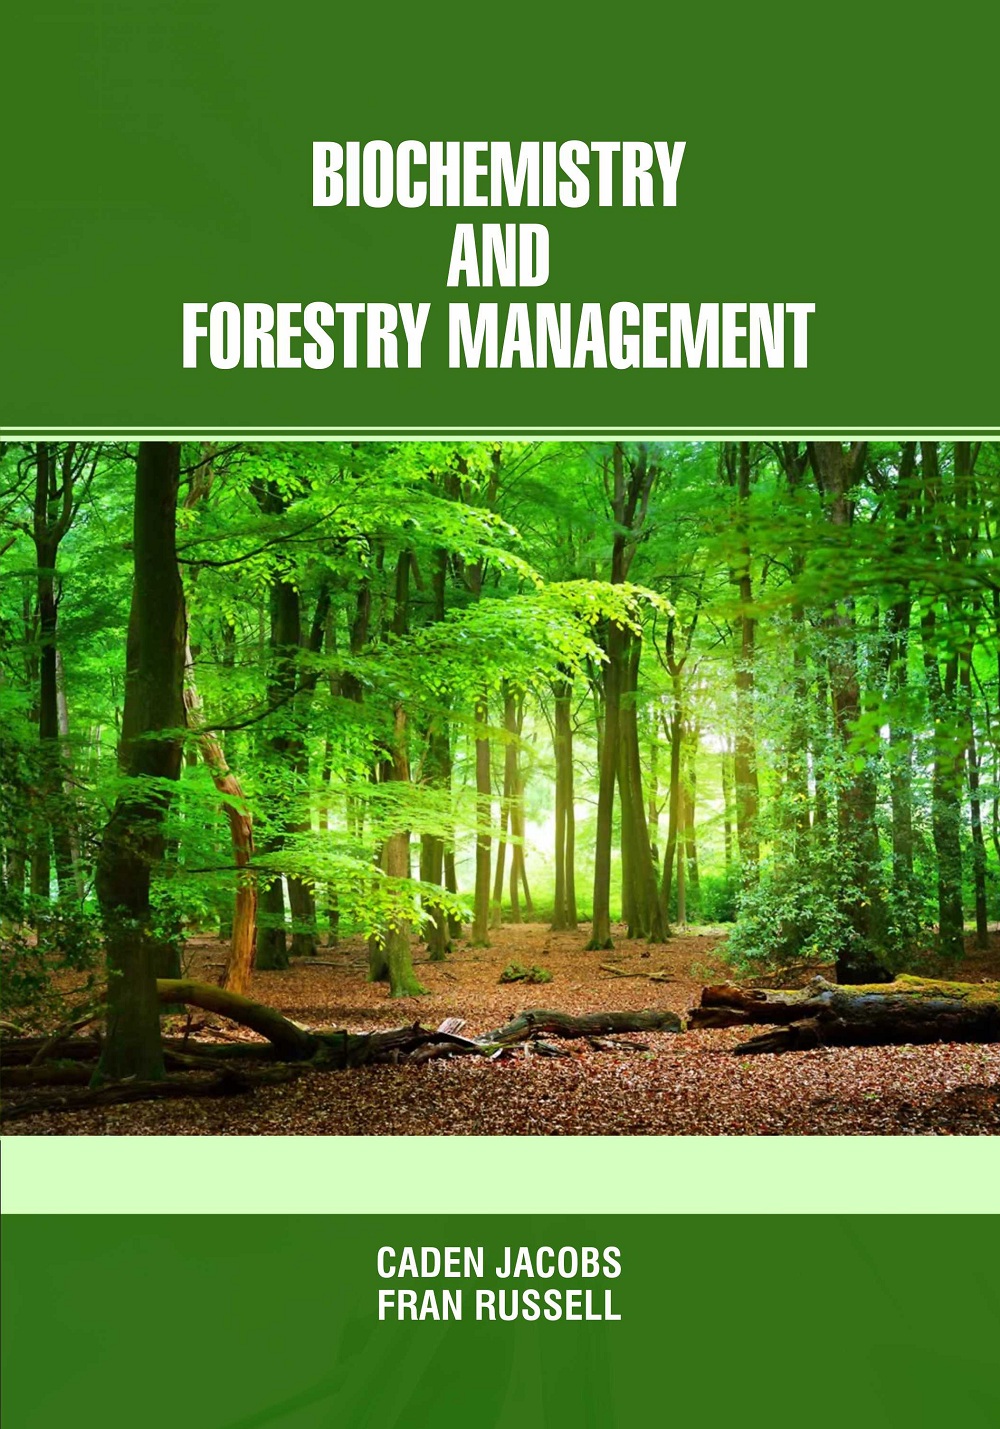 catalog/books/Biochemistry and Forestry Management.jpg